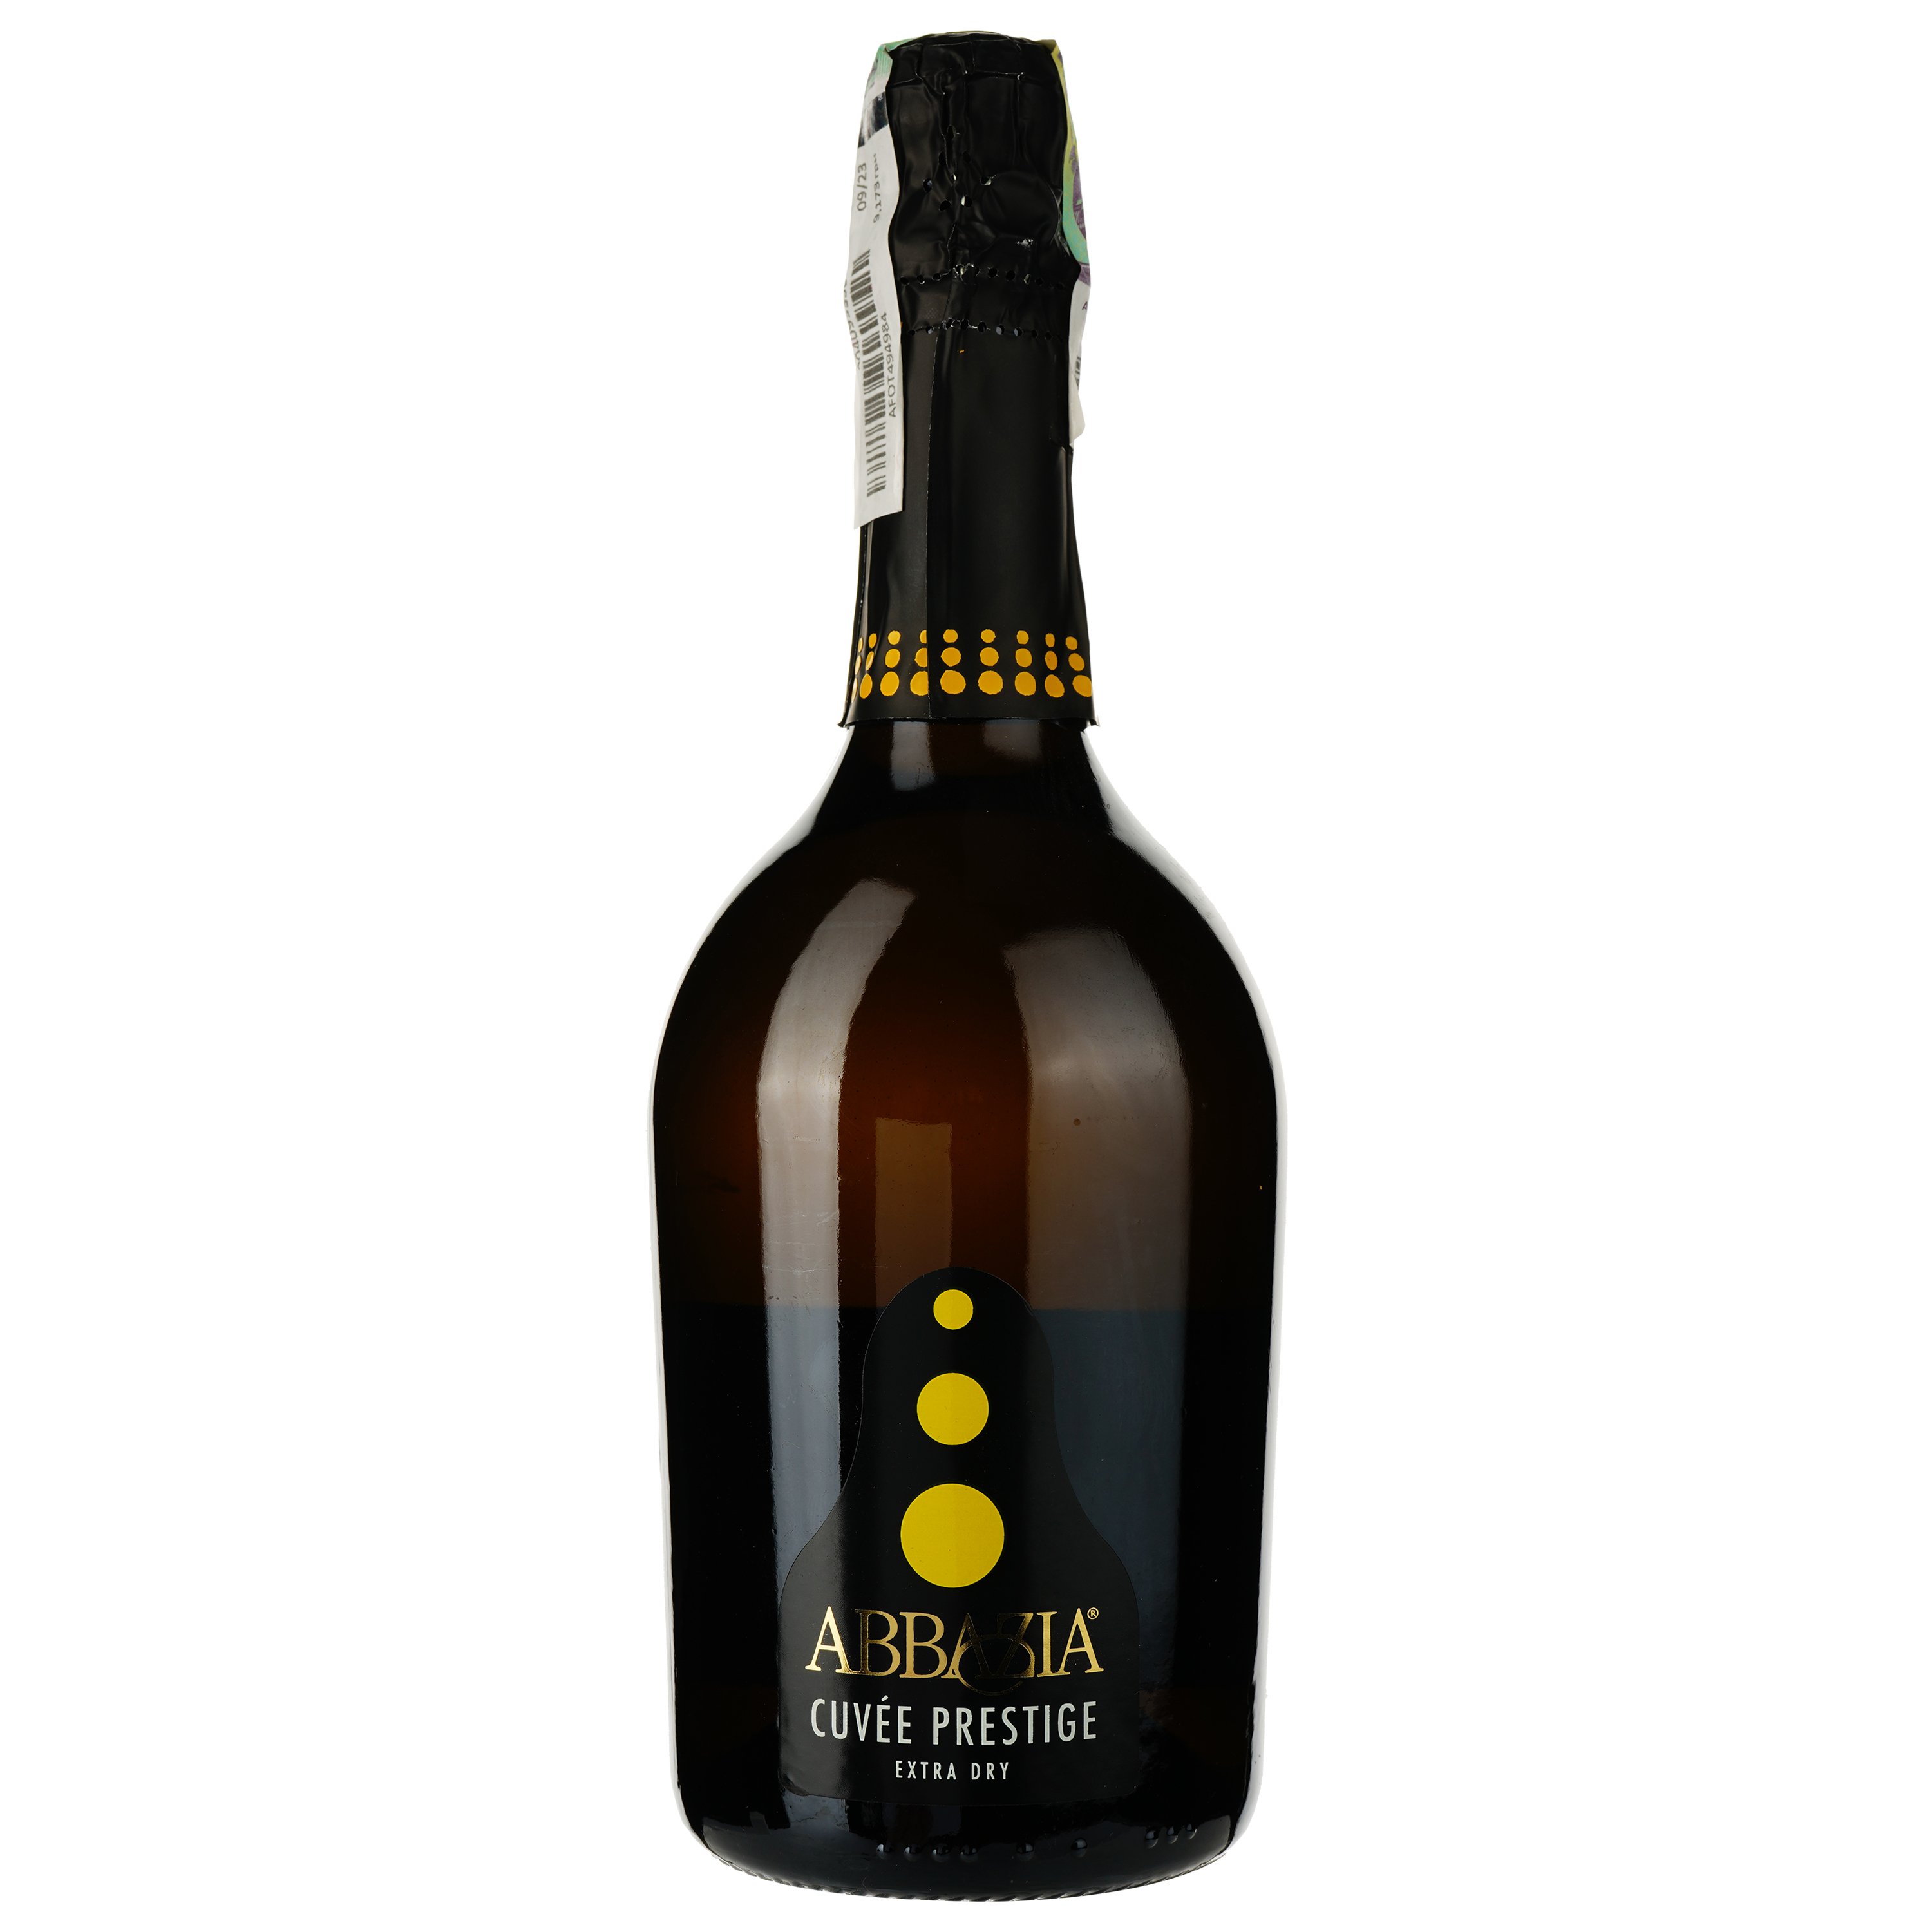 Игристое вино Abbazia Cuvee Prestige Spumante Extra Dry, белое, экстра-драй, 0.75 л - фото 1